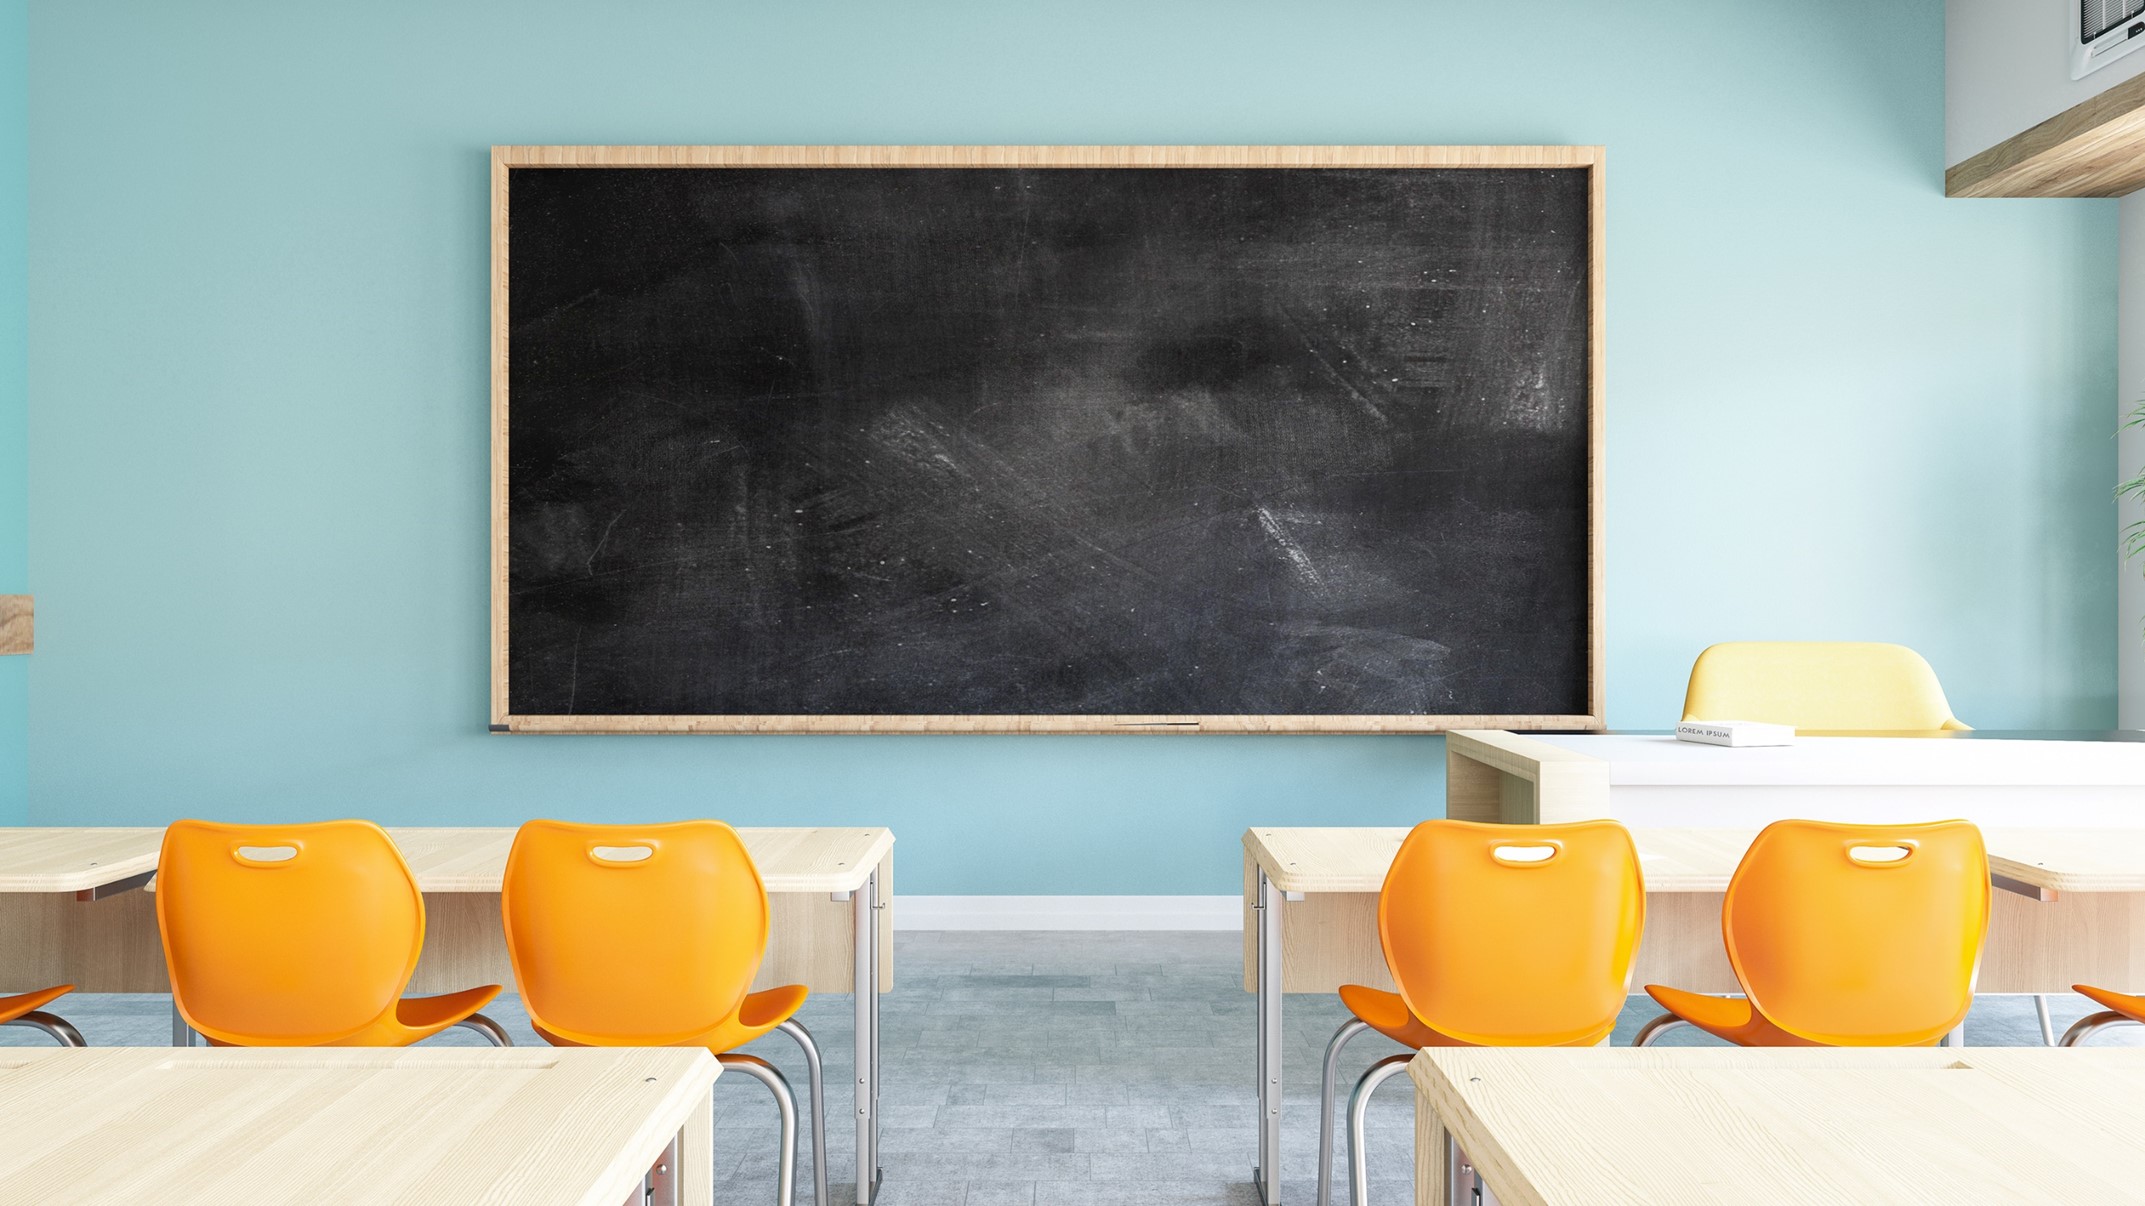 Classroom with blackboard and orange chairs